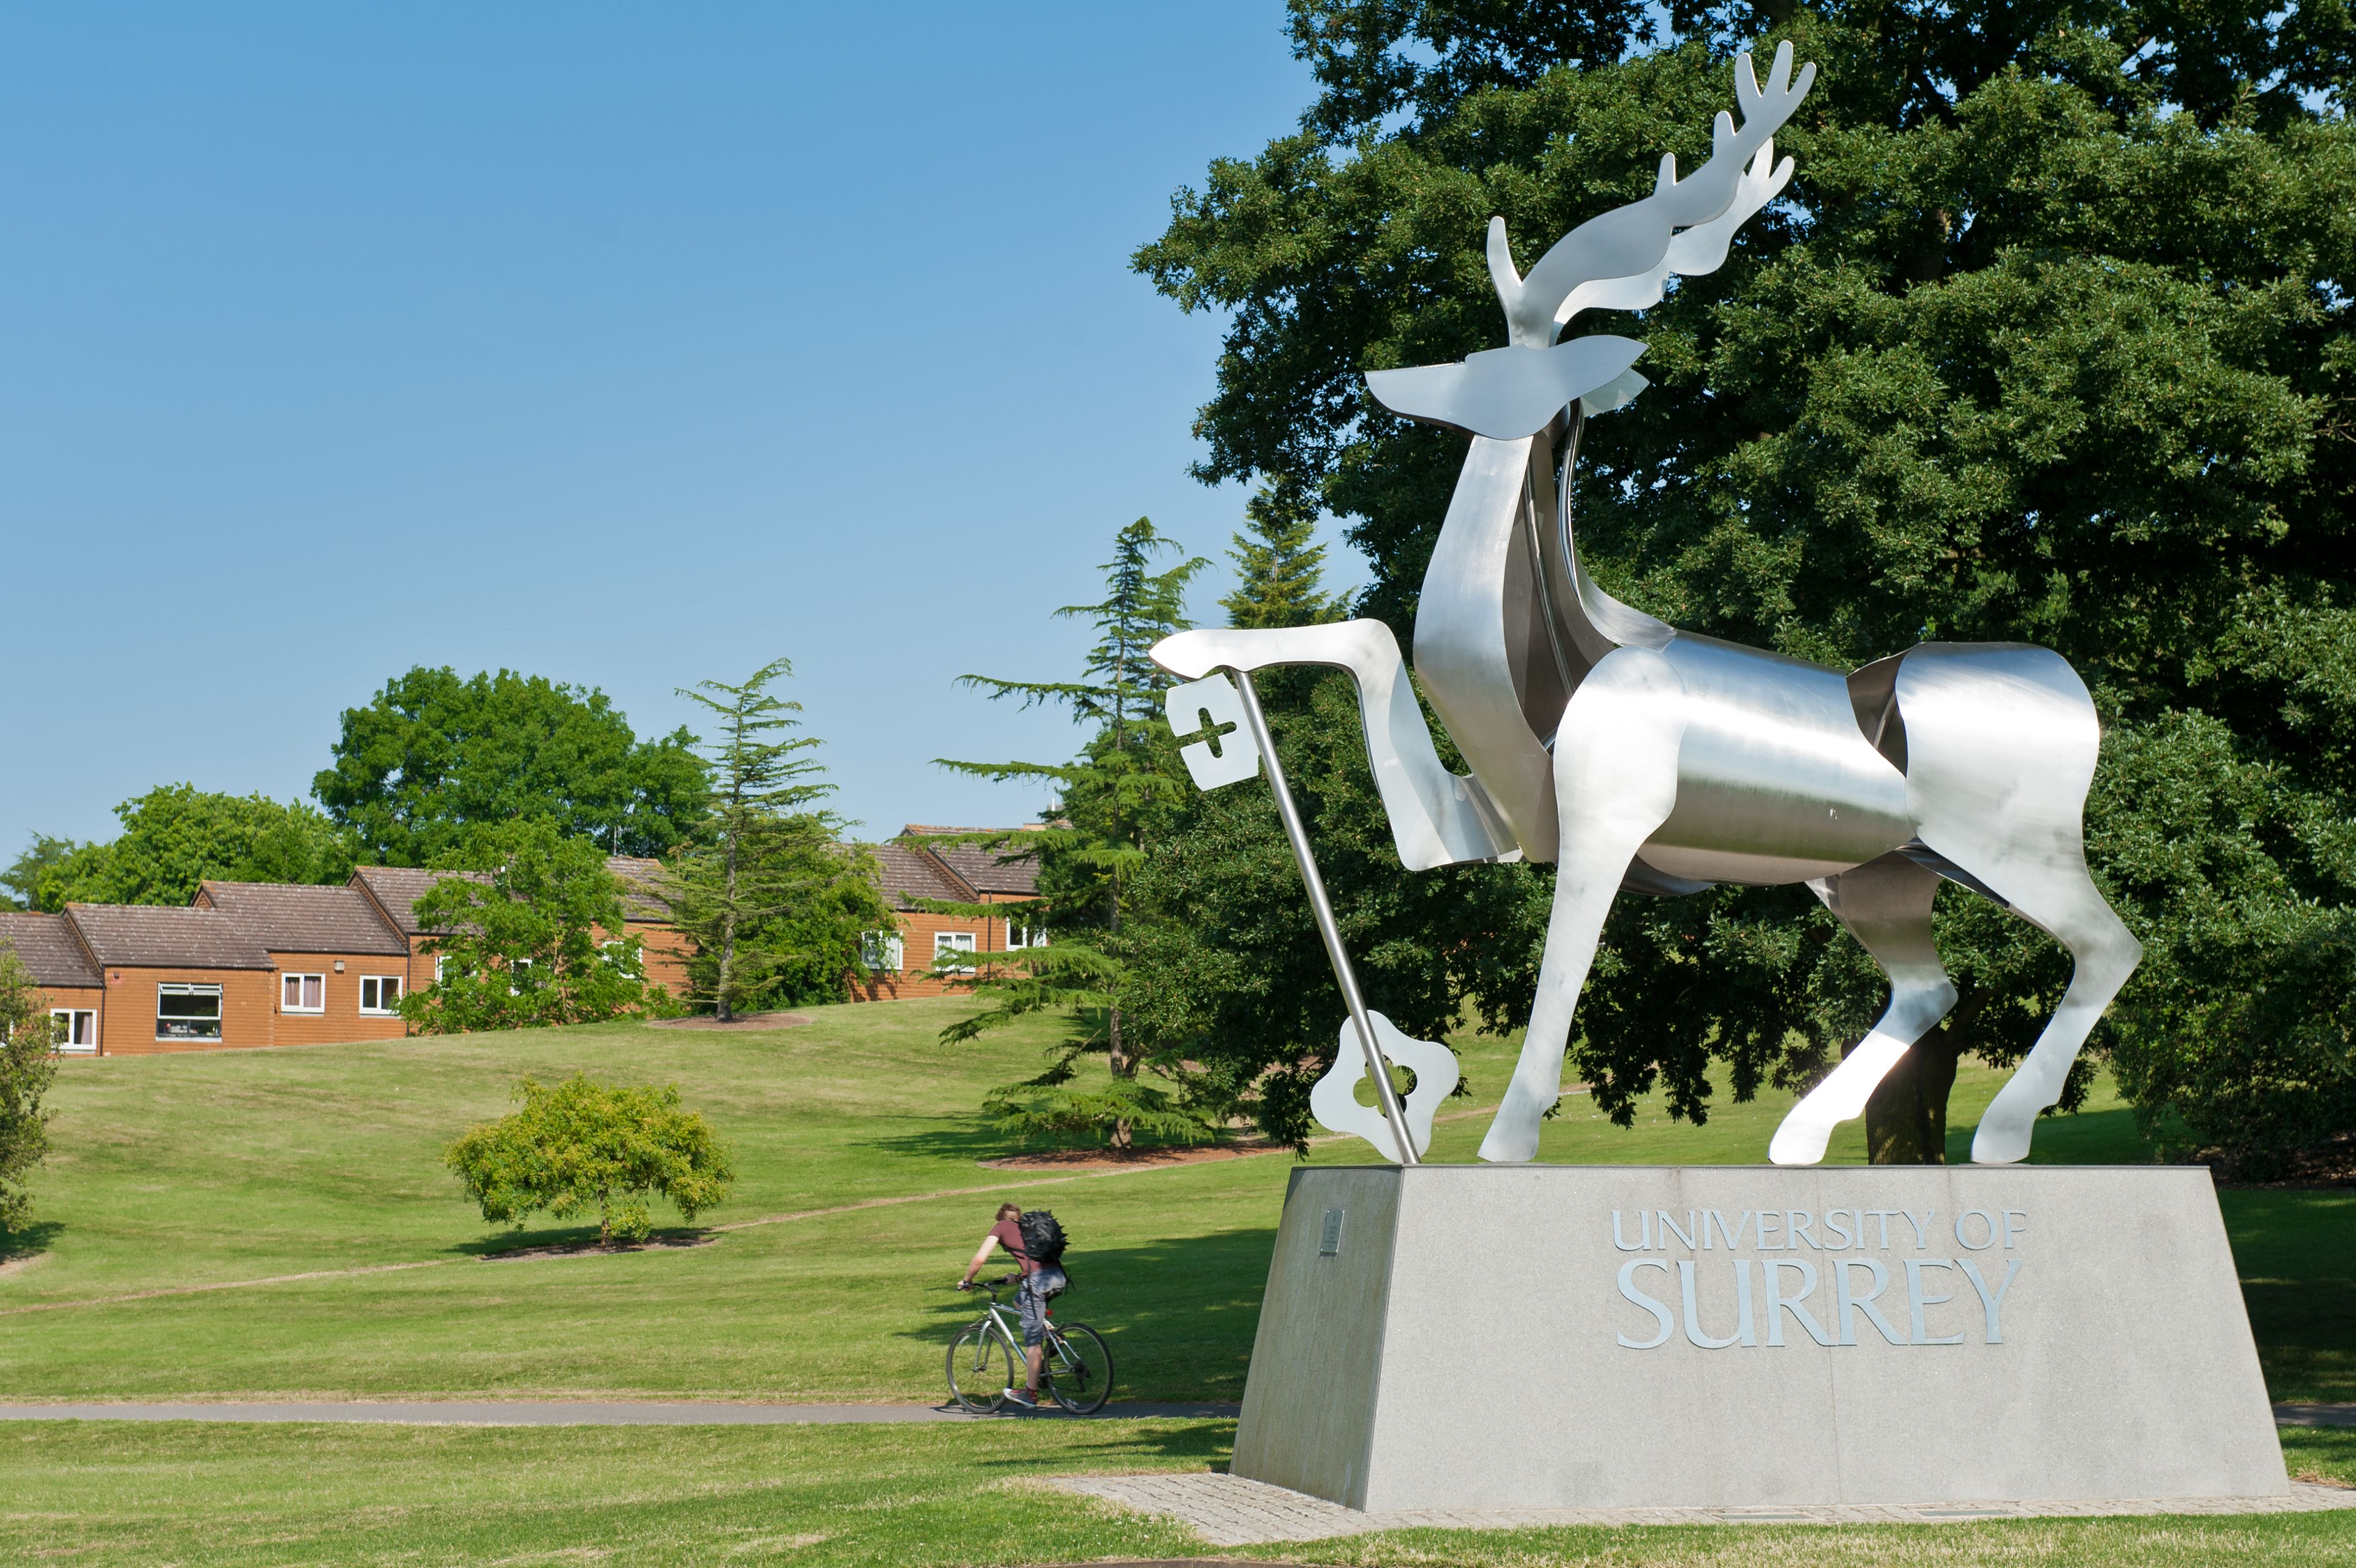 Stag sculpture, University of Surrey